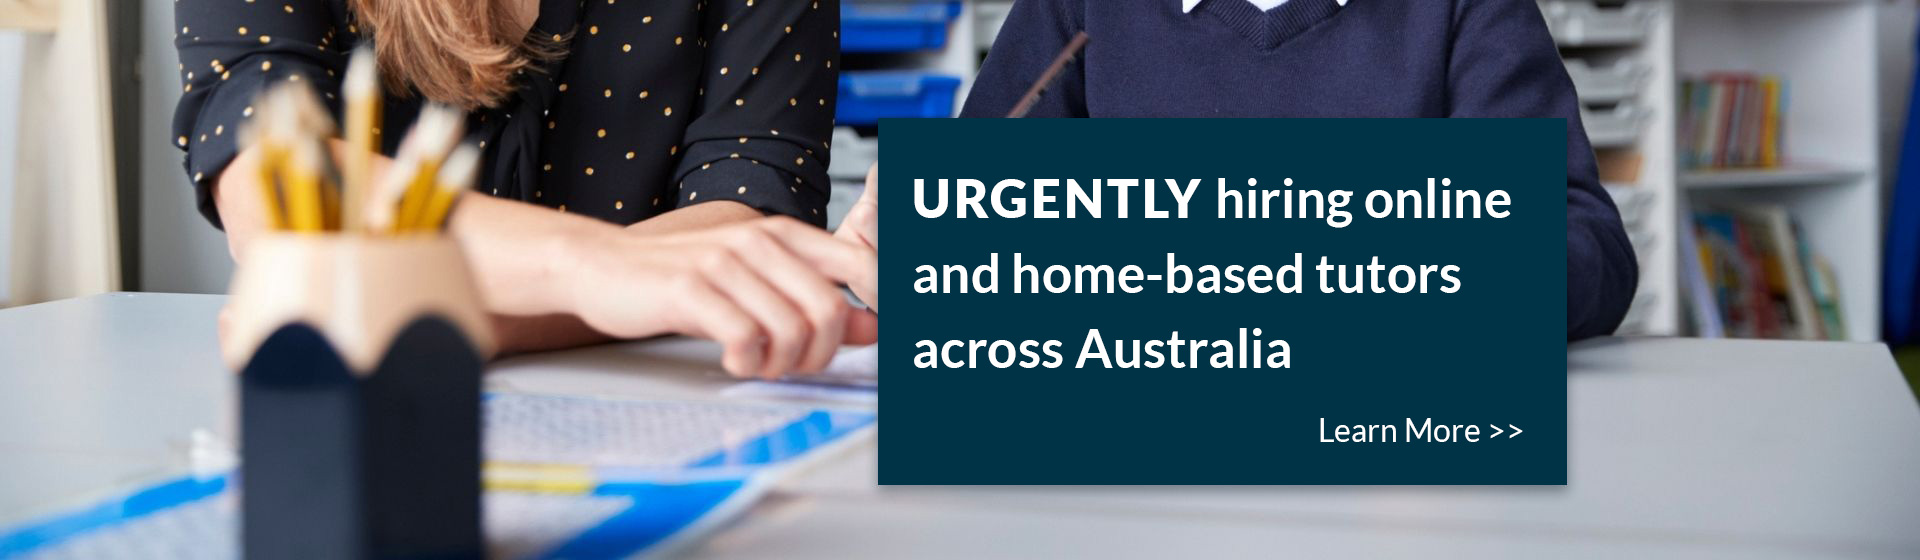 Urgently hiring online and home based tutors across Australia